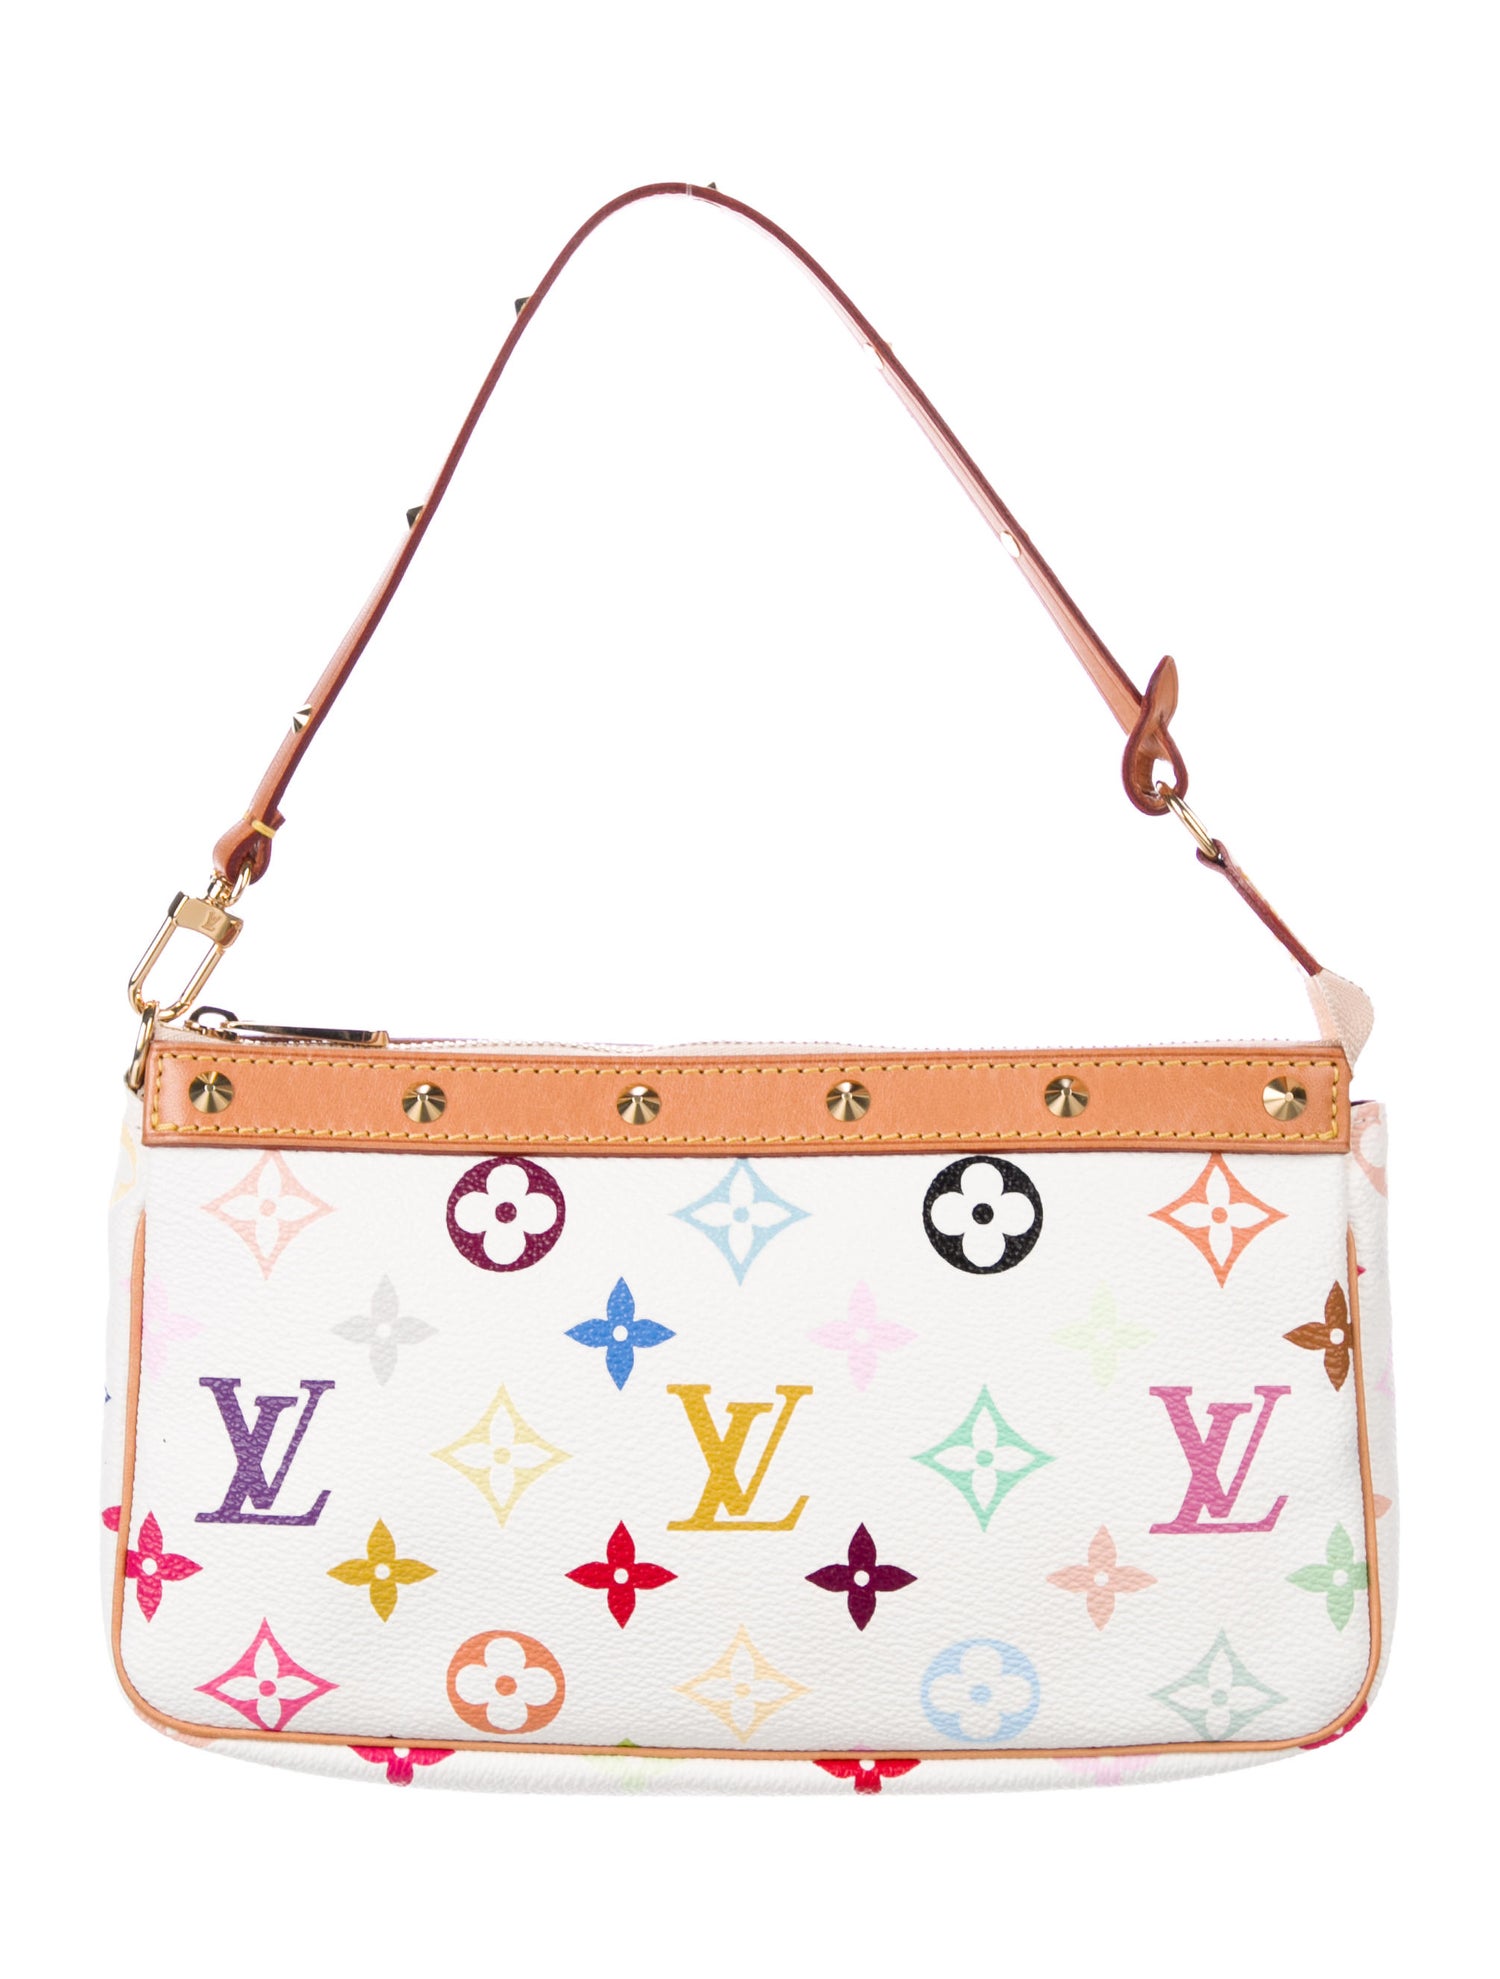 MUST-have designer handbags under 1000!!! #LV #lv #louisvuitton